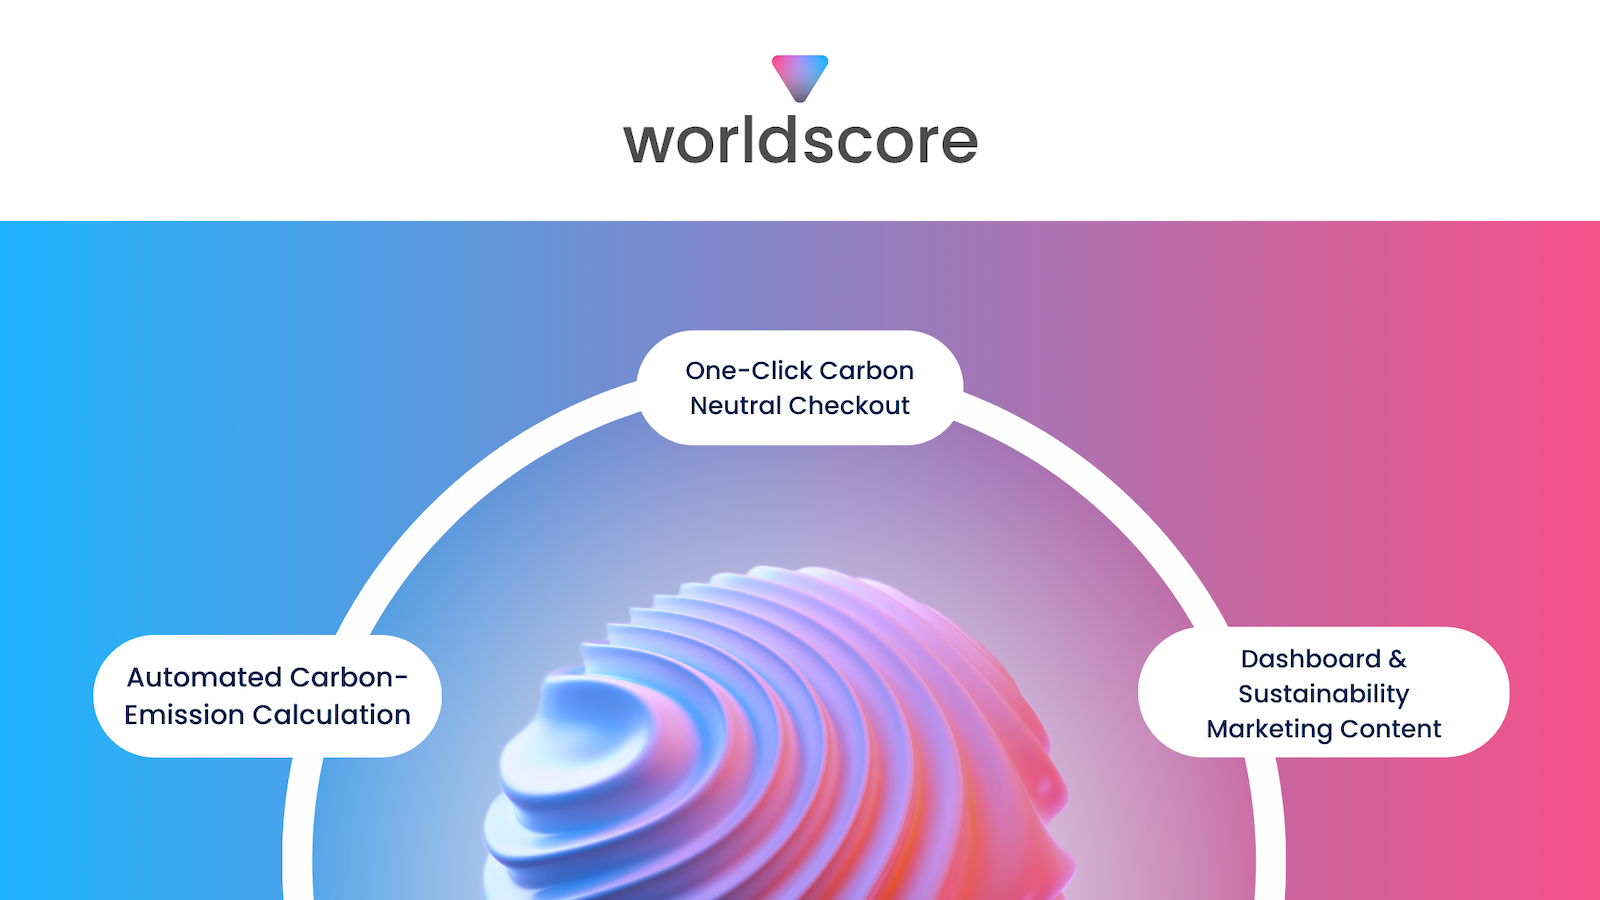 worldscore logo on top of a wavy sphere describing the features